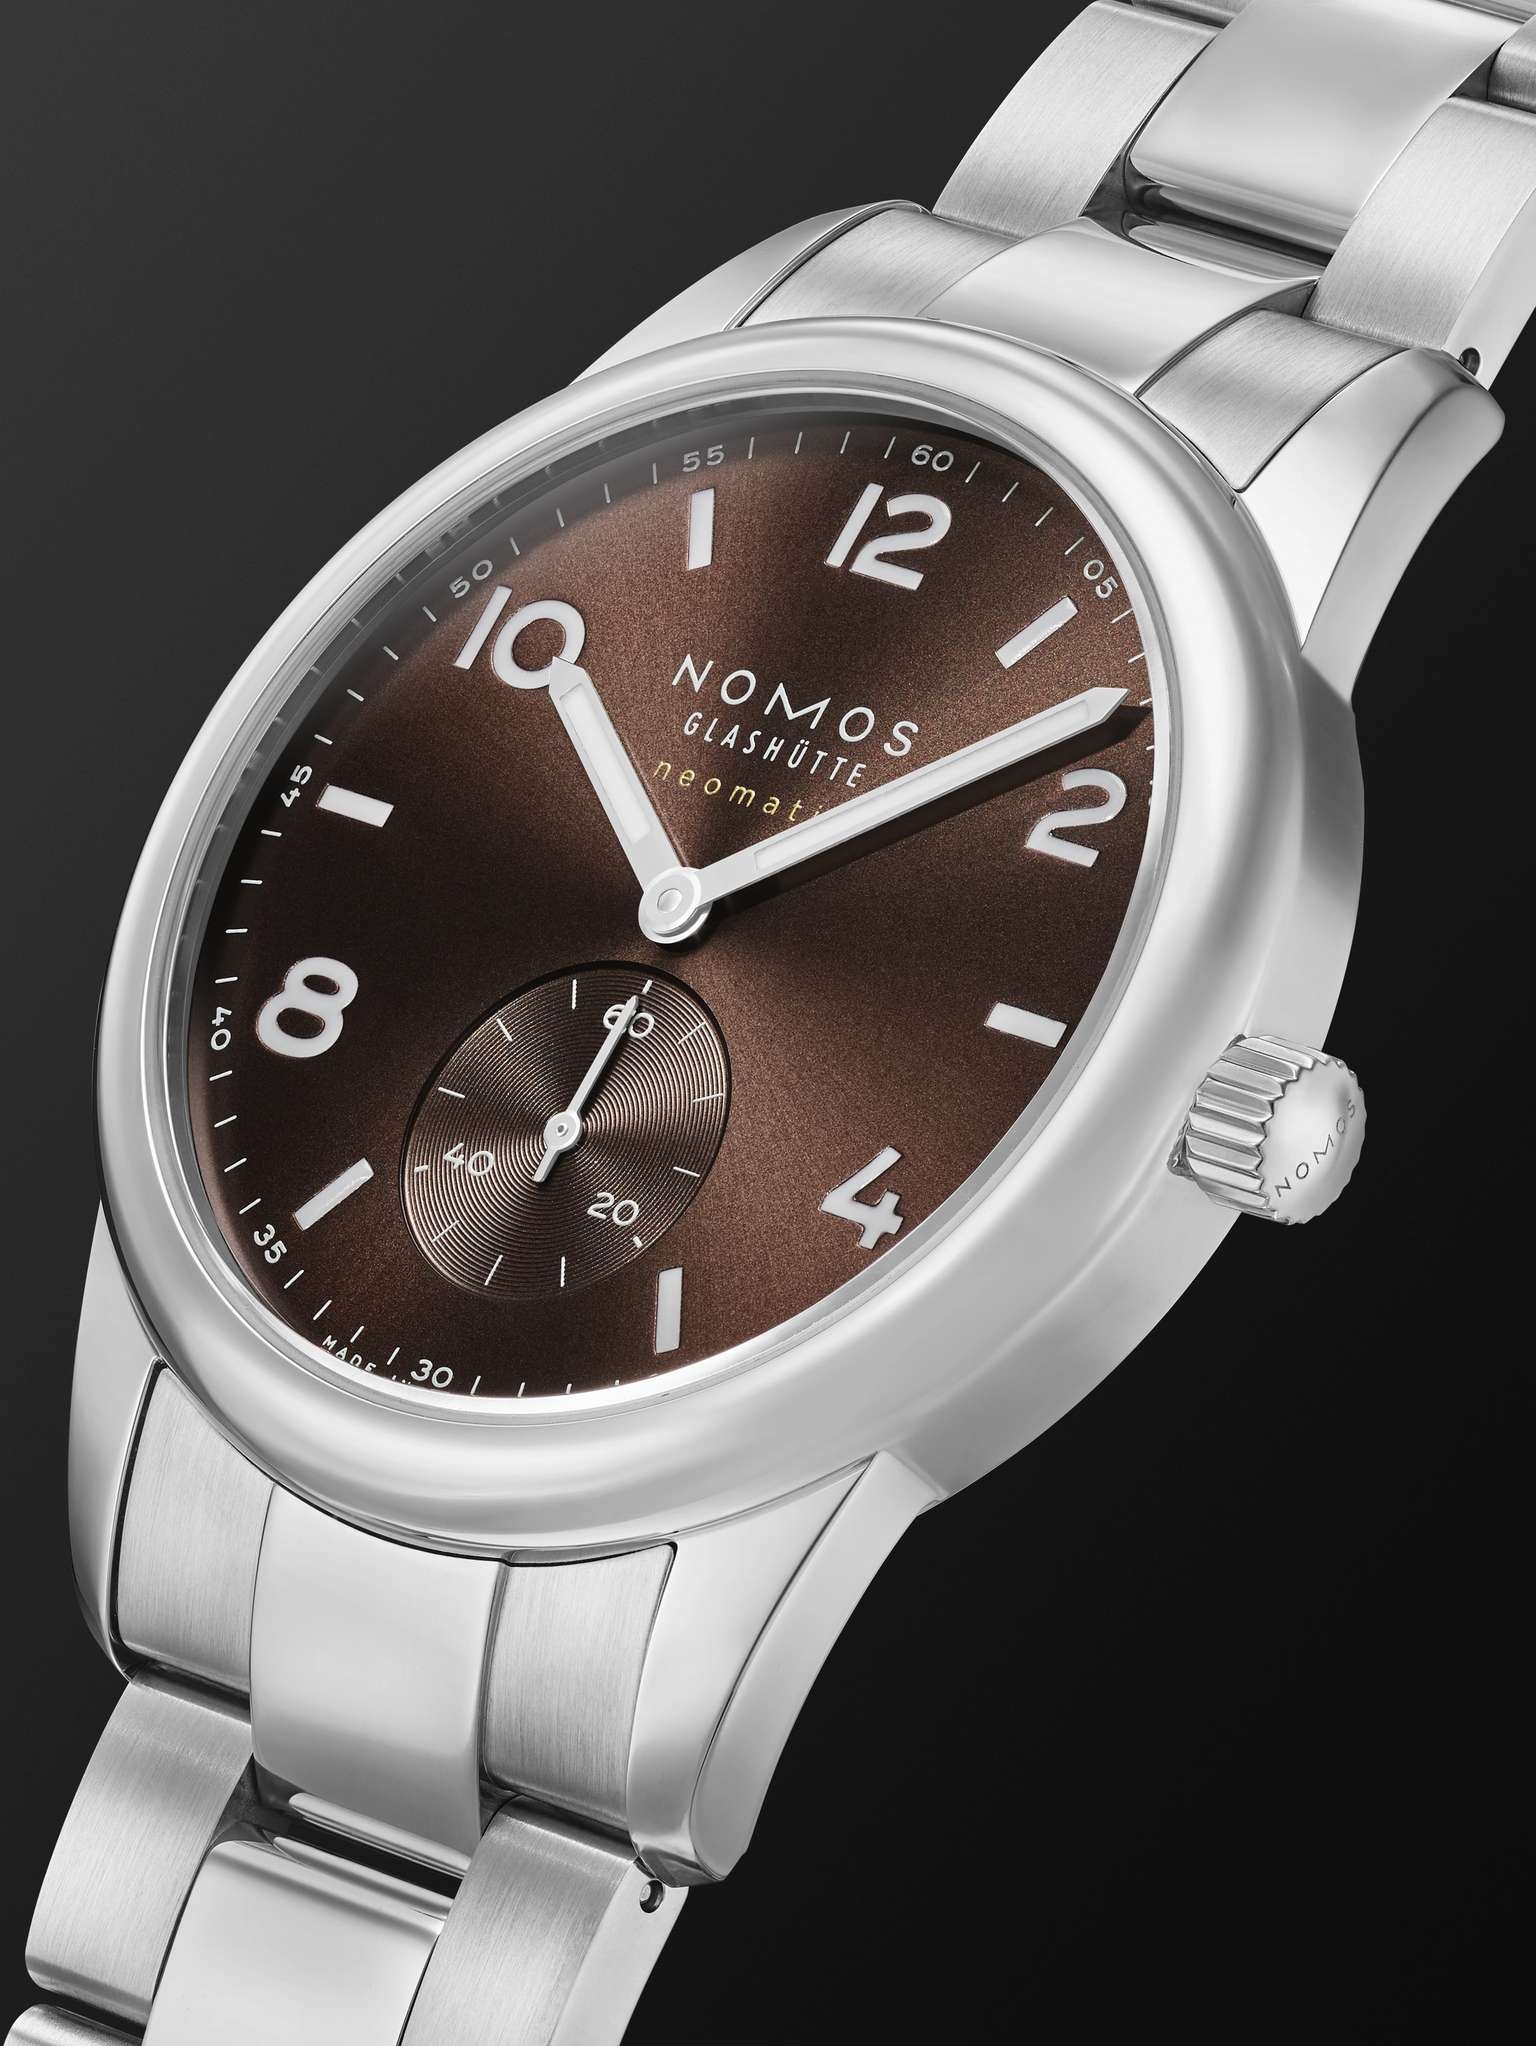 Club Sport Neomatik Automatic 39.5mm Stainless Steel Watch, Ref. No. 760 - 3